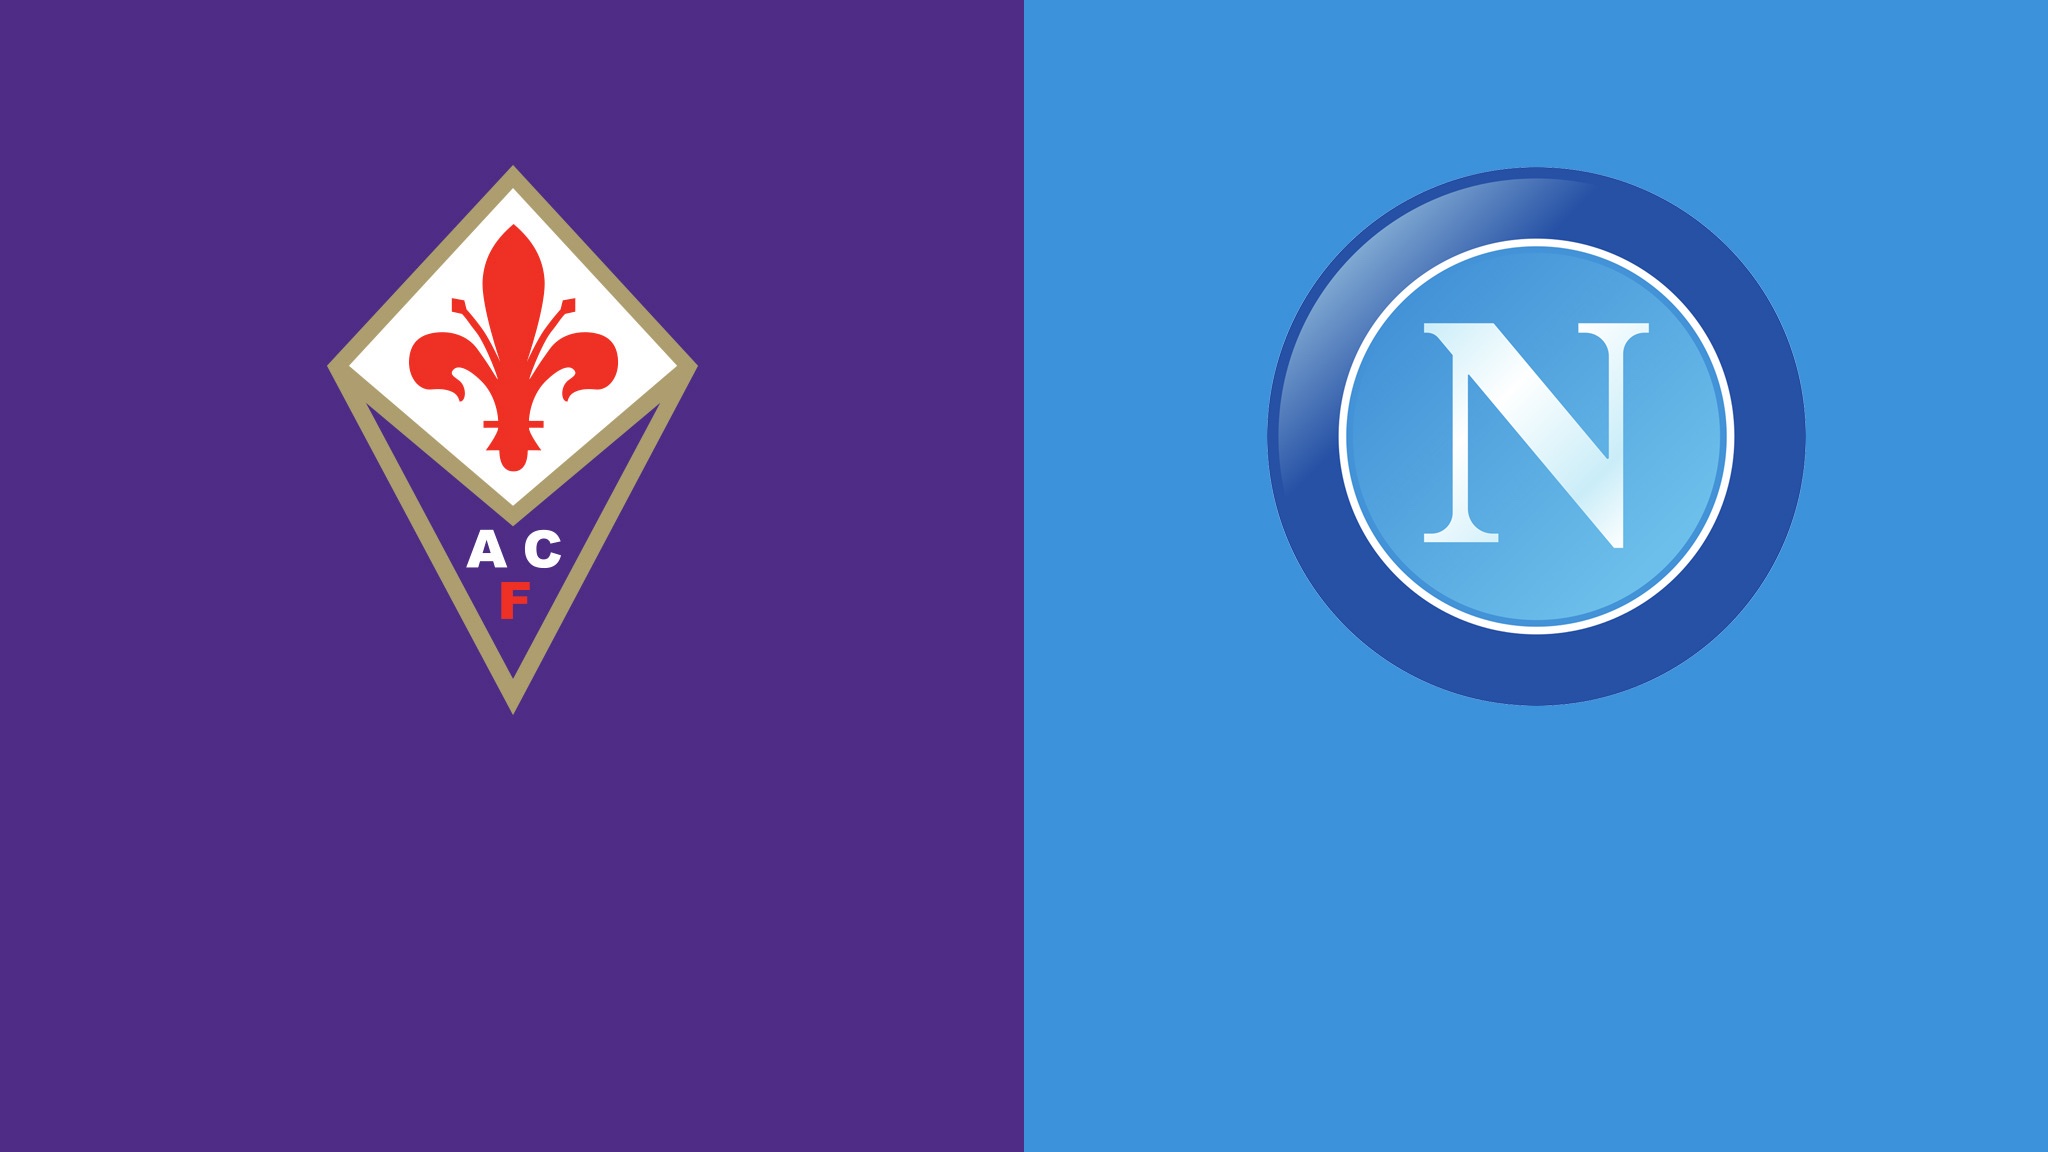 Fiorentina and Napoli, championships